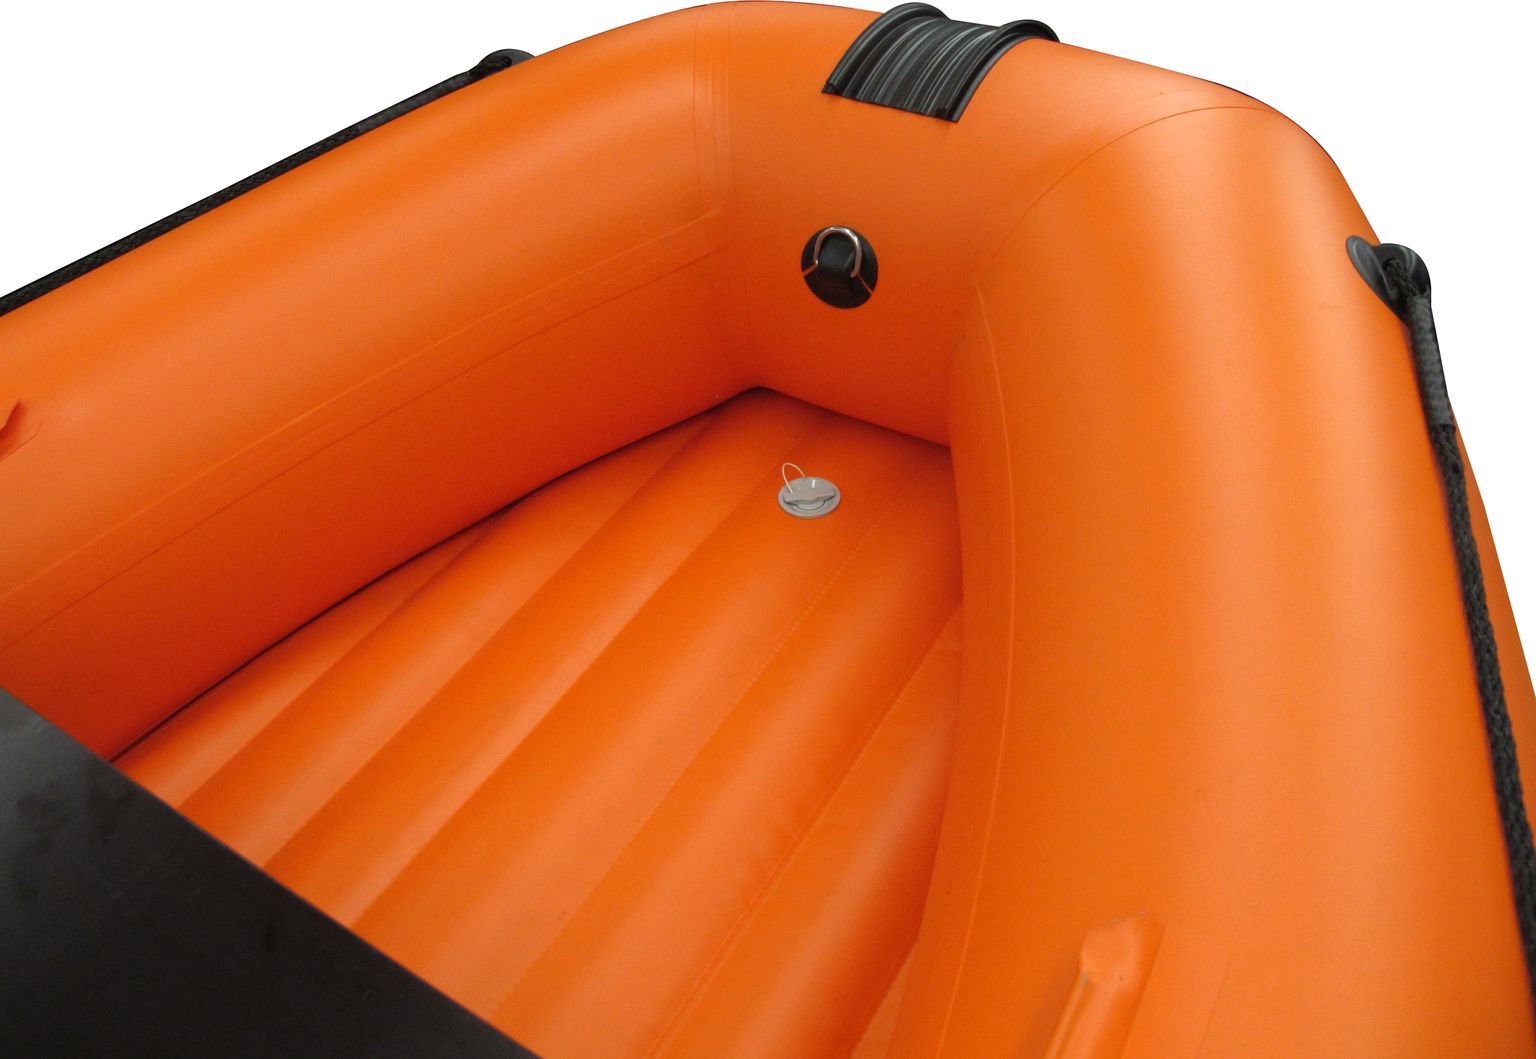 Надувная лодка ПВХ SOLAR-350 К (Оптима), оранжевый SLR350k_opt_orange - фото 5